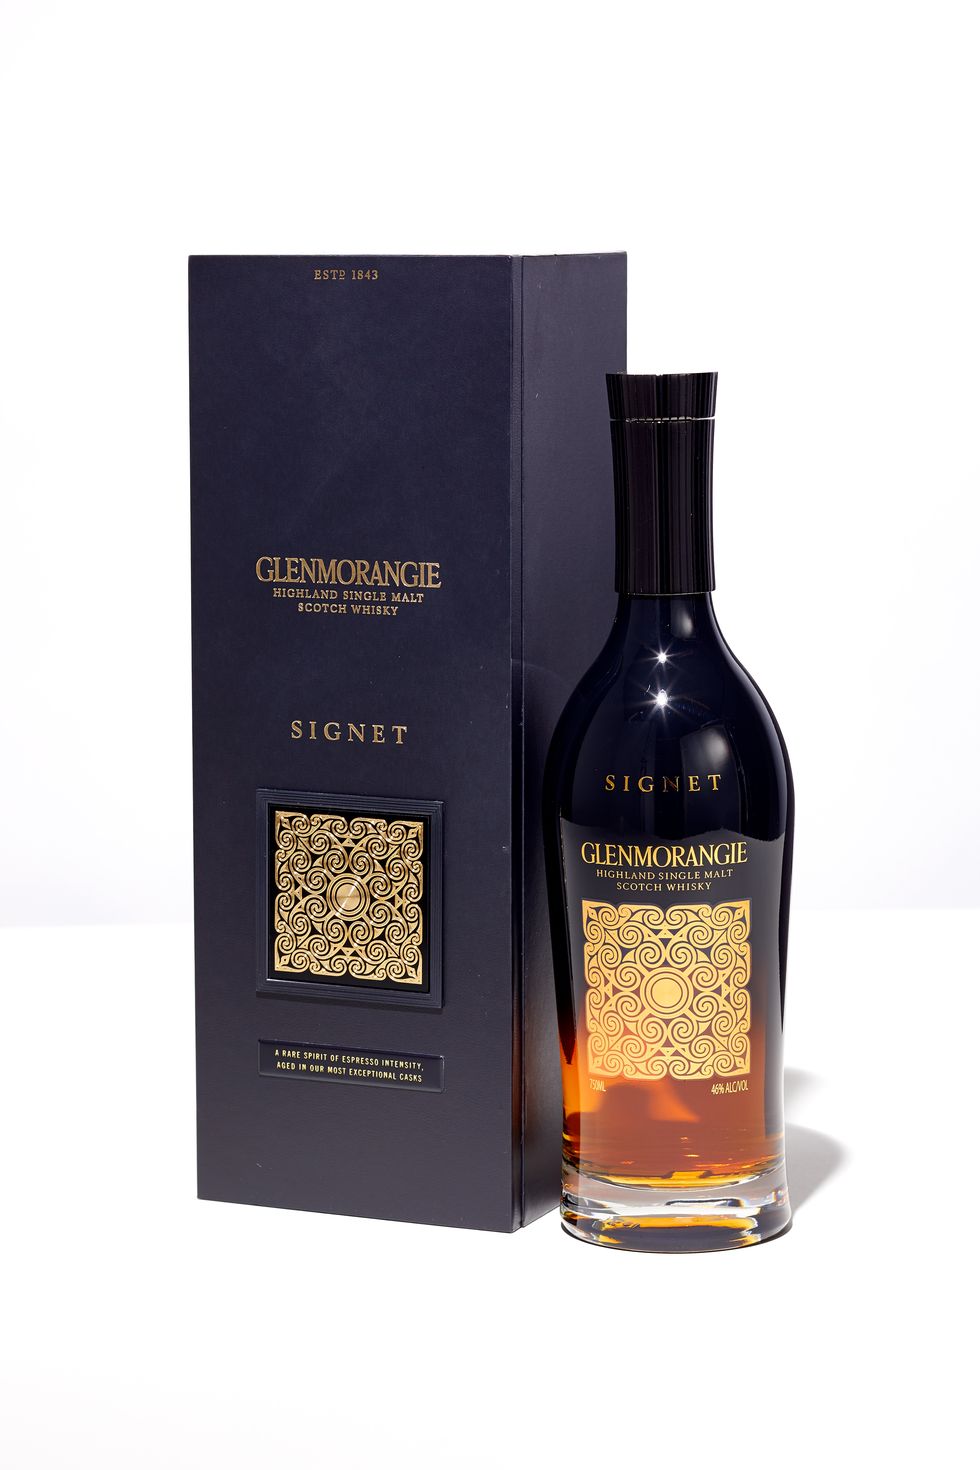 Glenmorangie Signet - The Whisky Shop - San Francisco